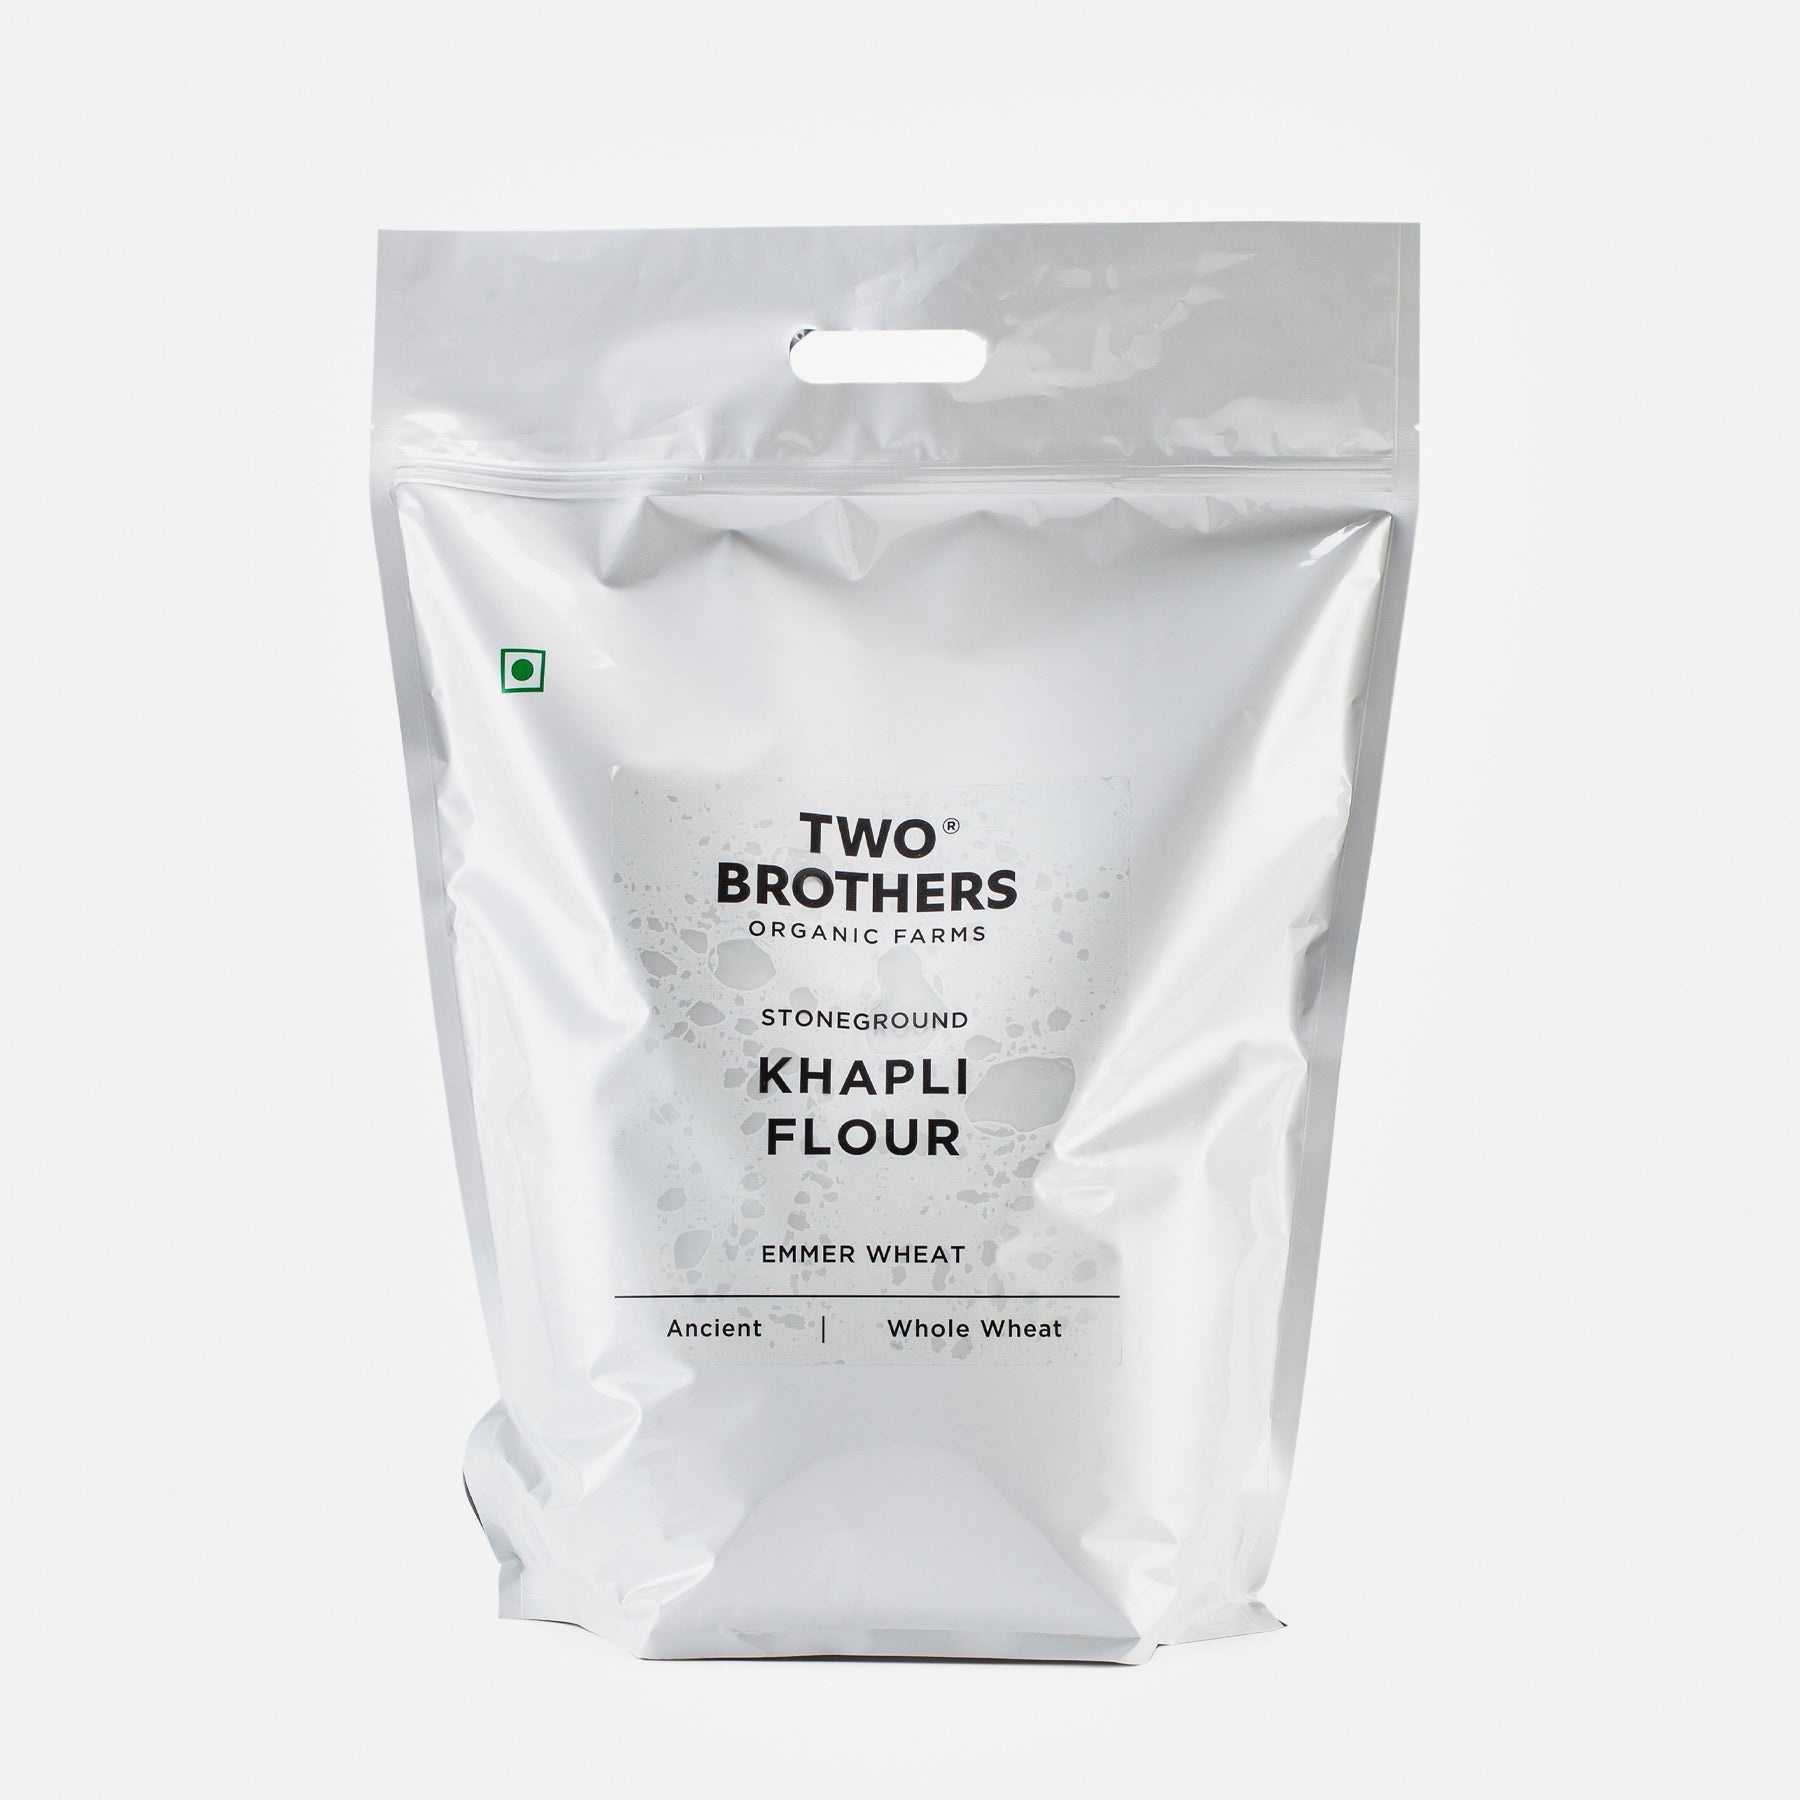 Khapli flour 5kg packet